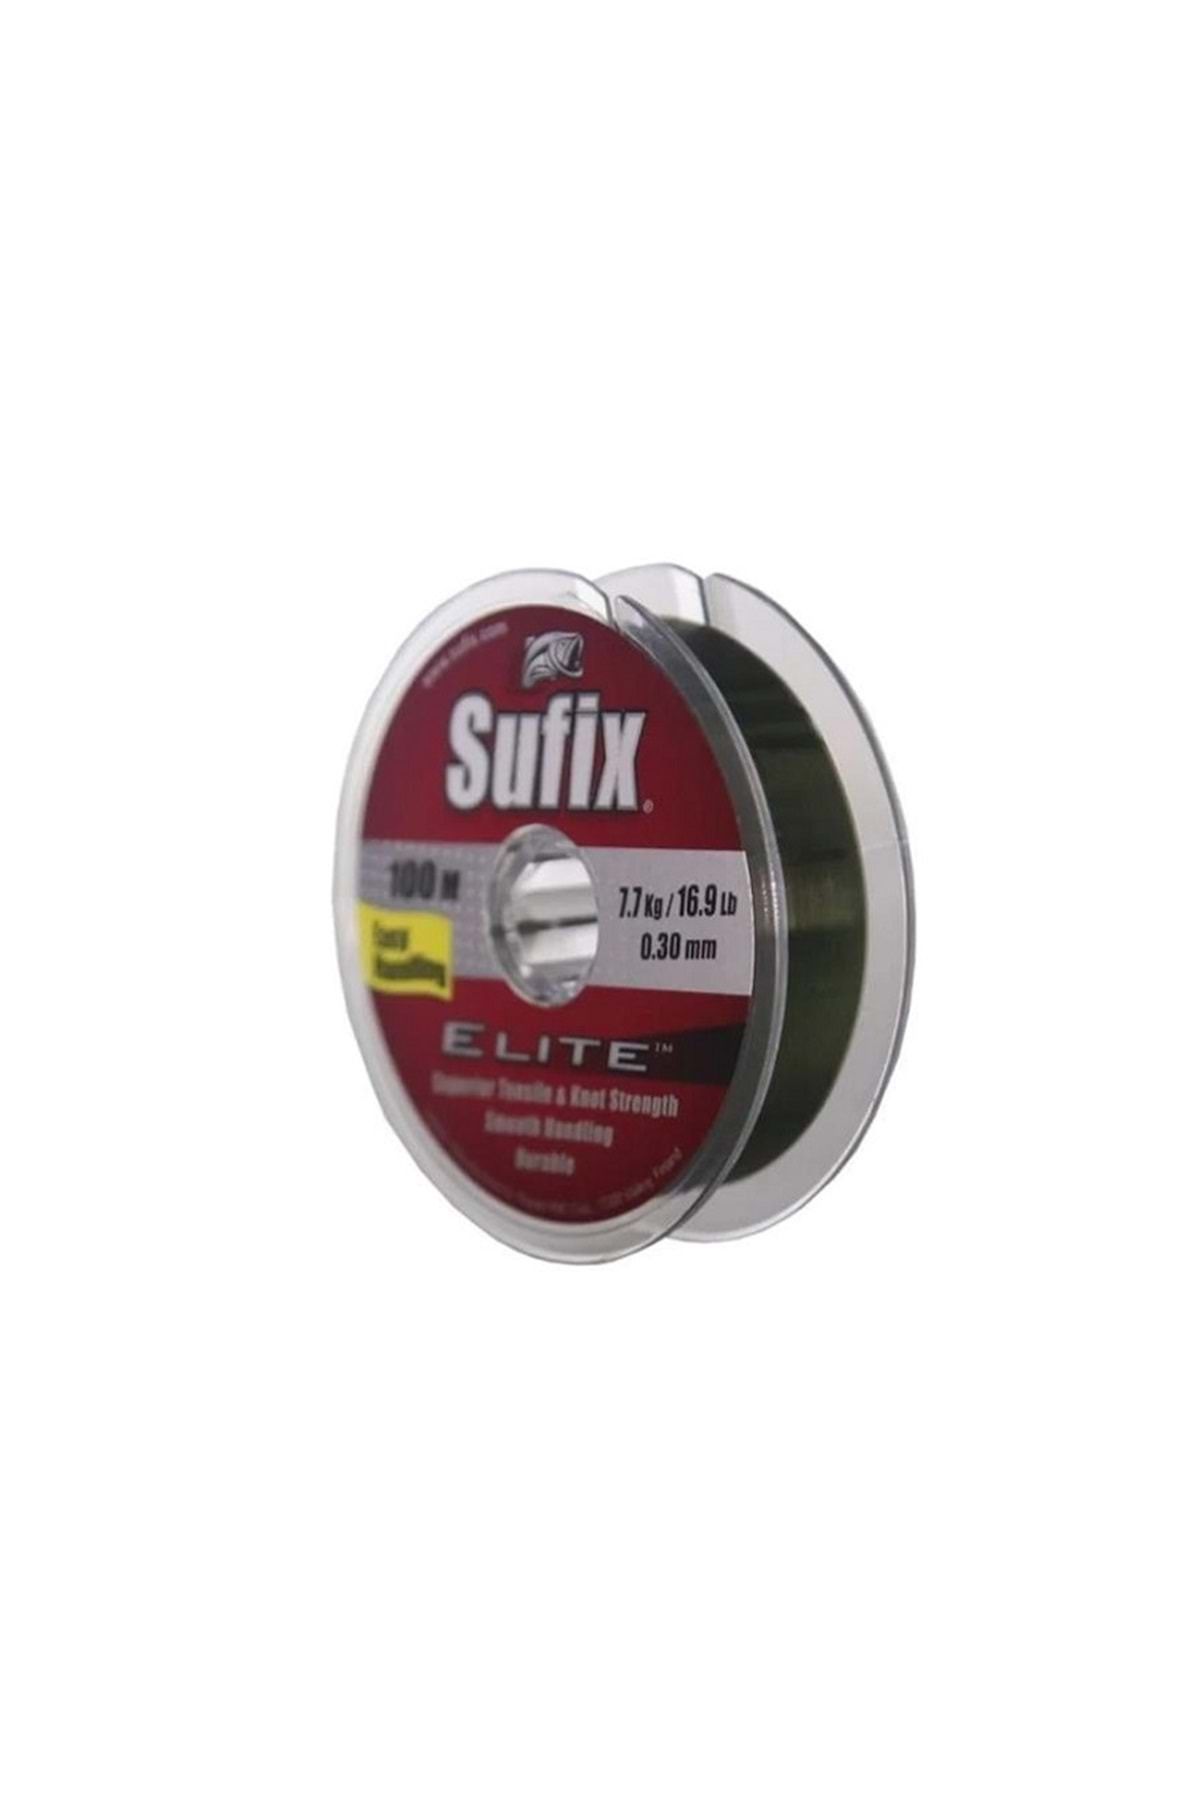 Sufix Elite 0.30mm Lovis Green 100m Fishing Line